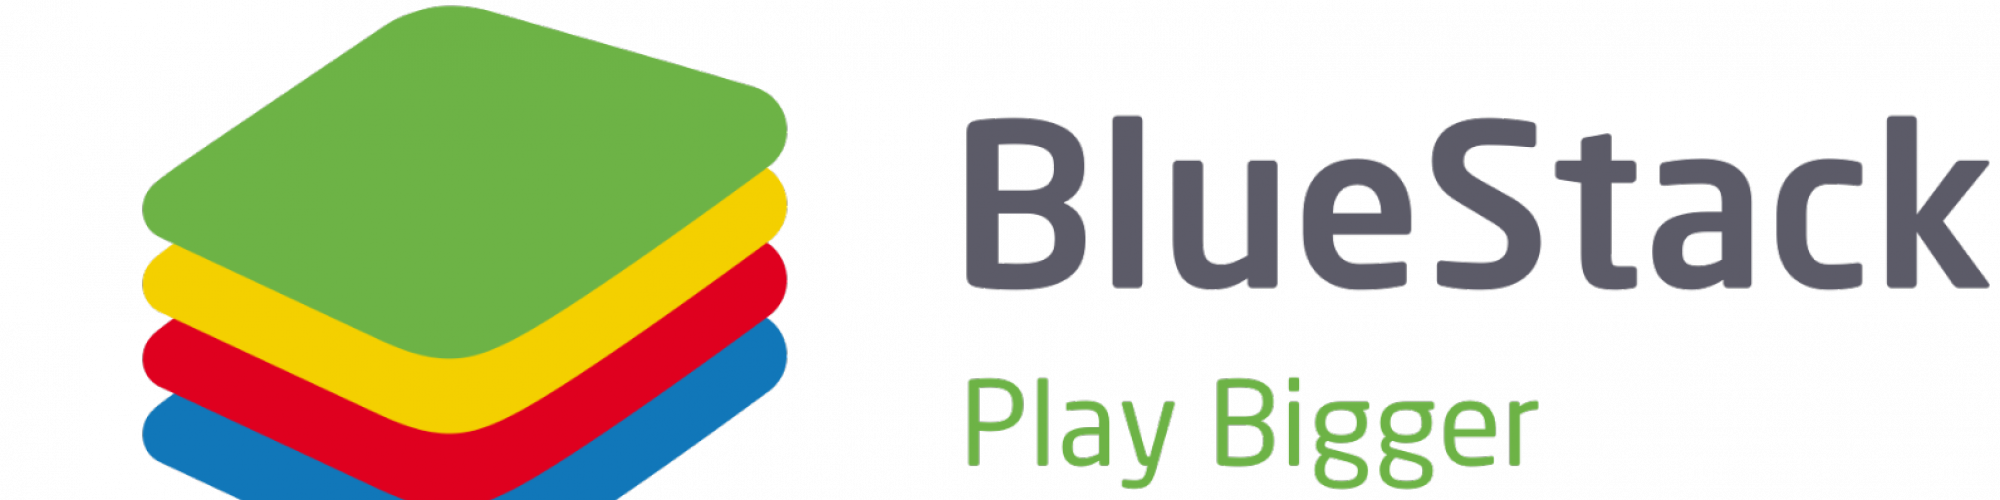 bluestacks app player for mac logo